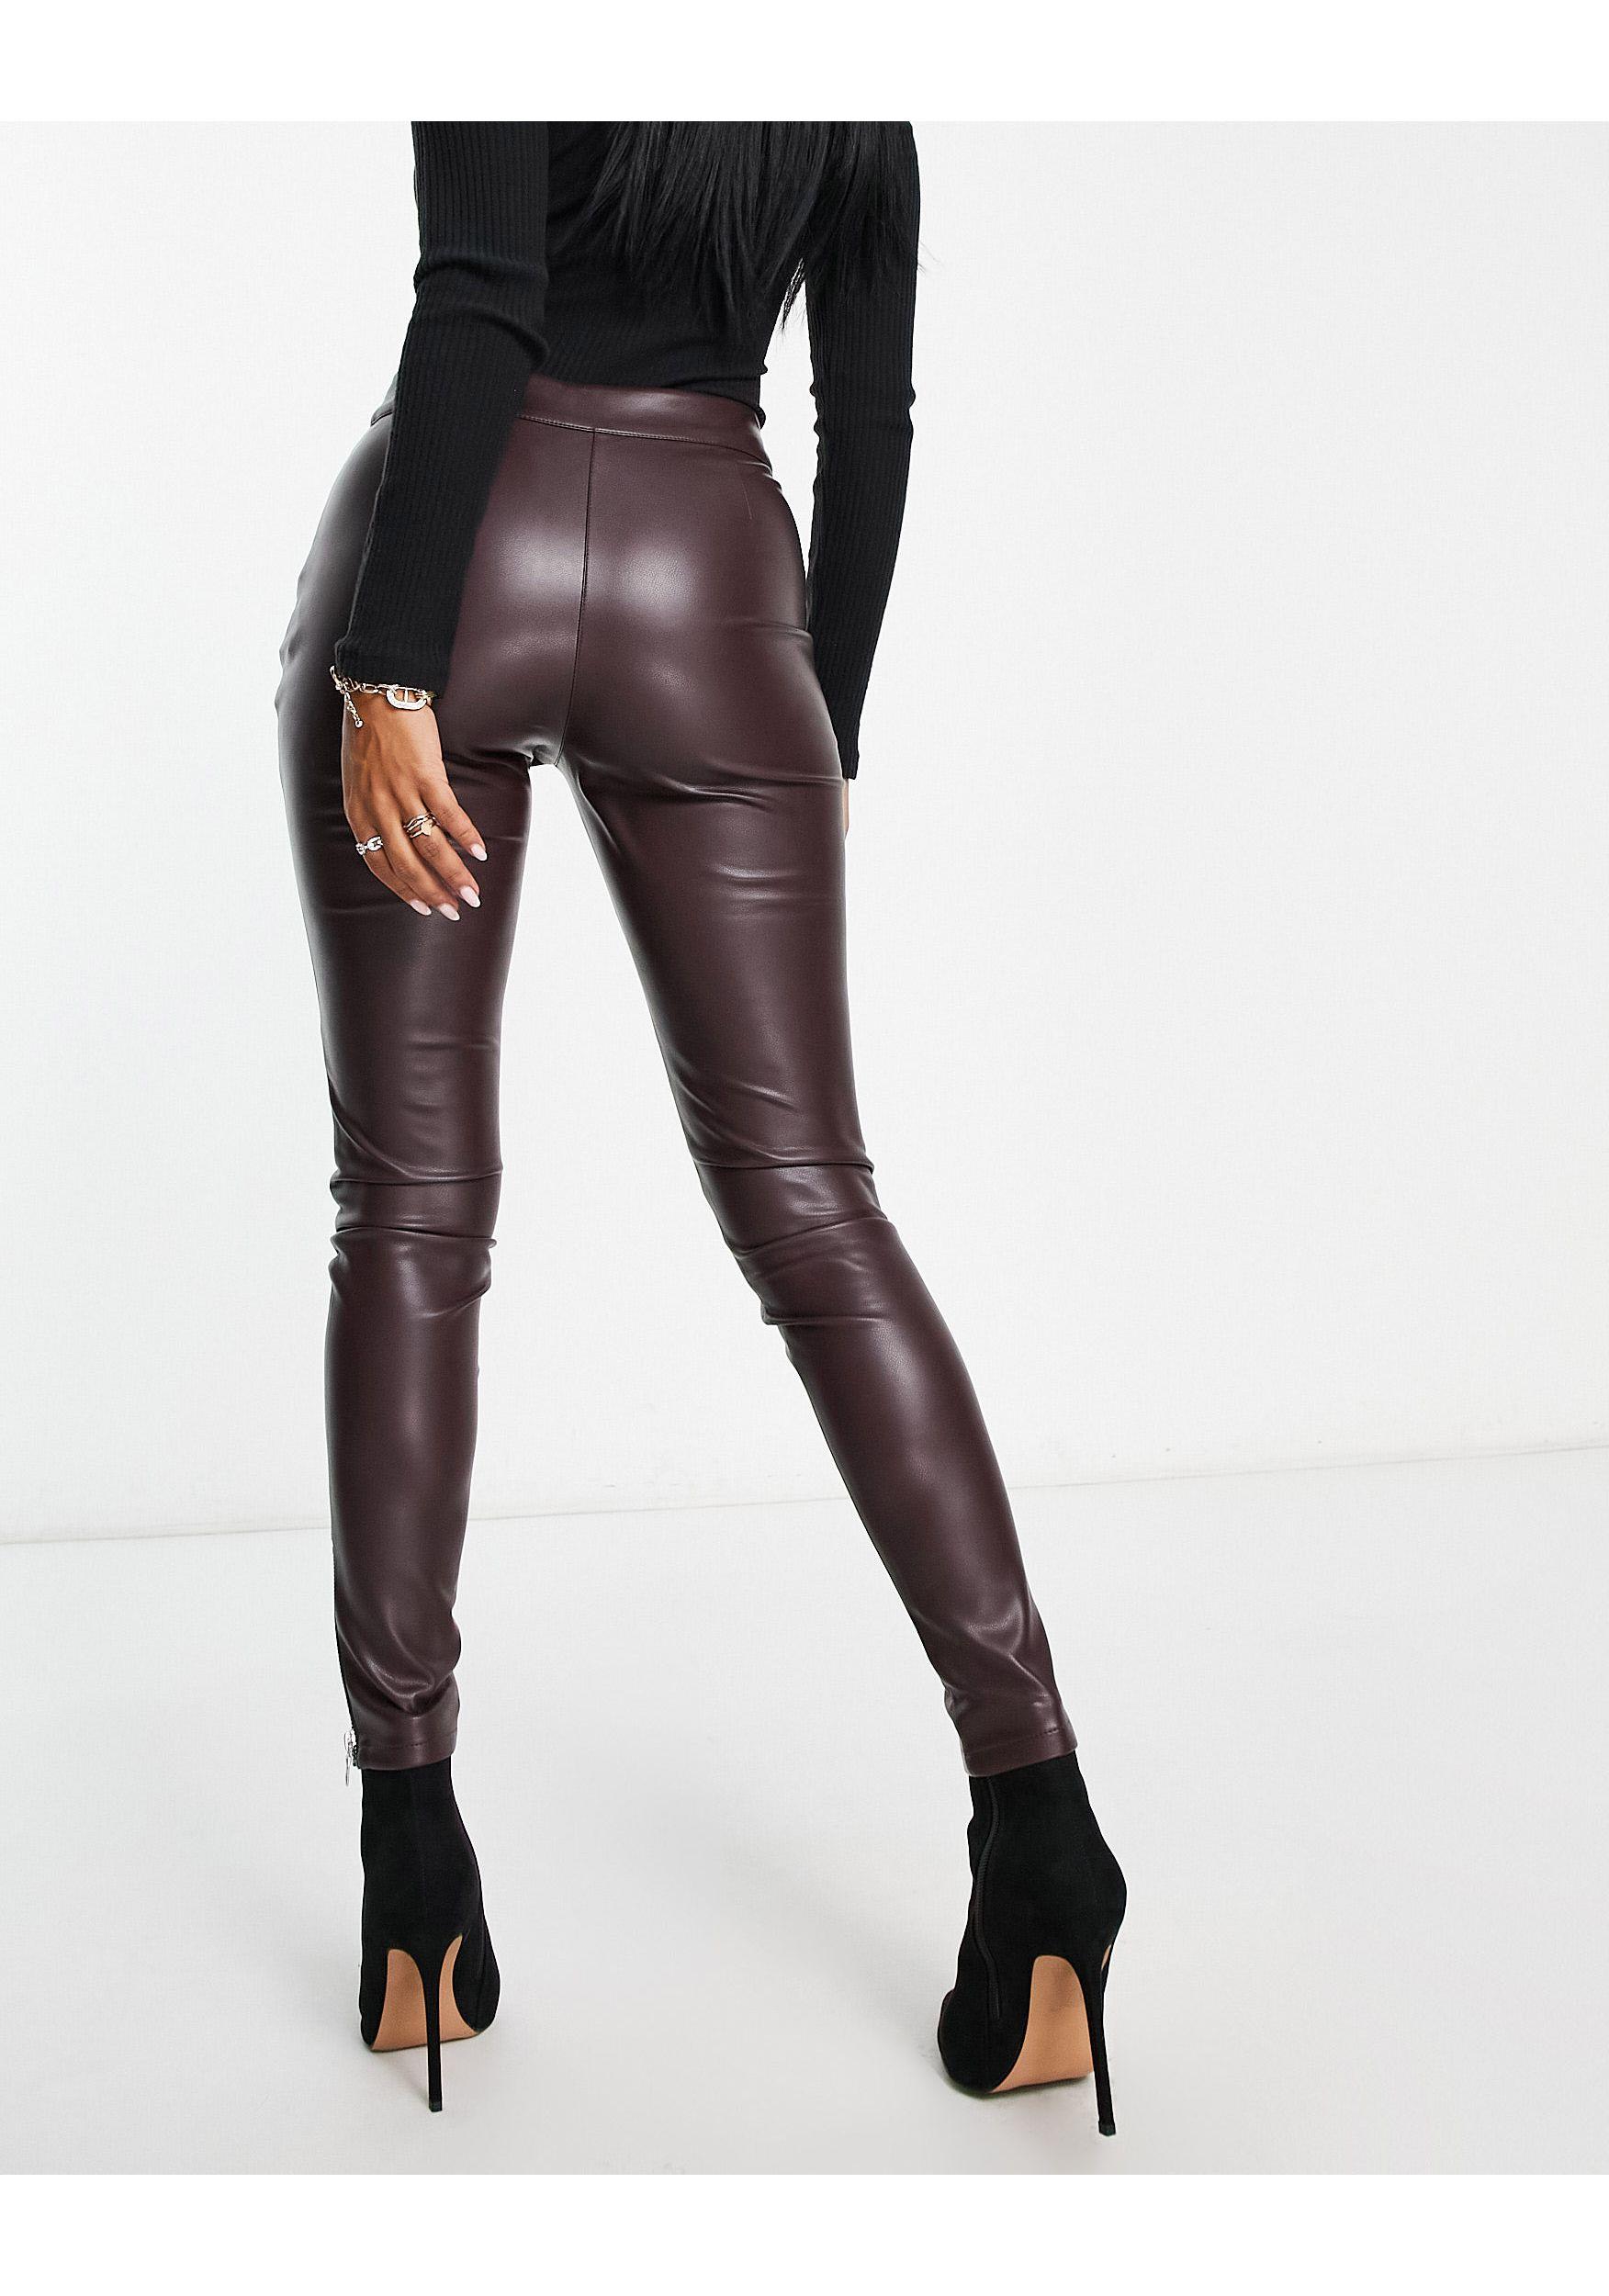 https://cdna.lystit.com/photos/asos/ba32e2bd/asos-Brown-Hourglass-Faux-Leather-Skinny-Moto-Pants-With-Zips.jpeg